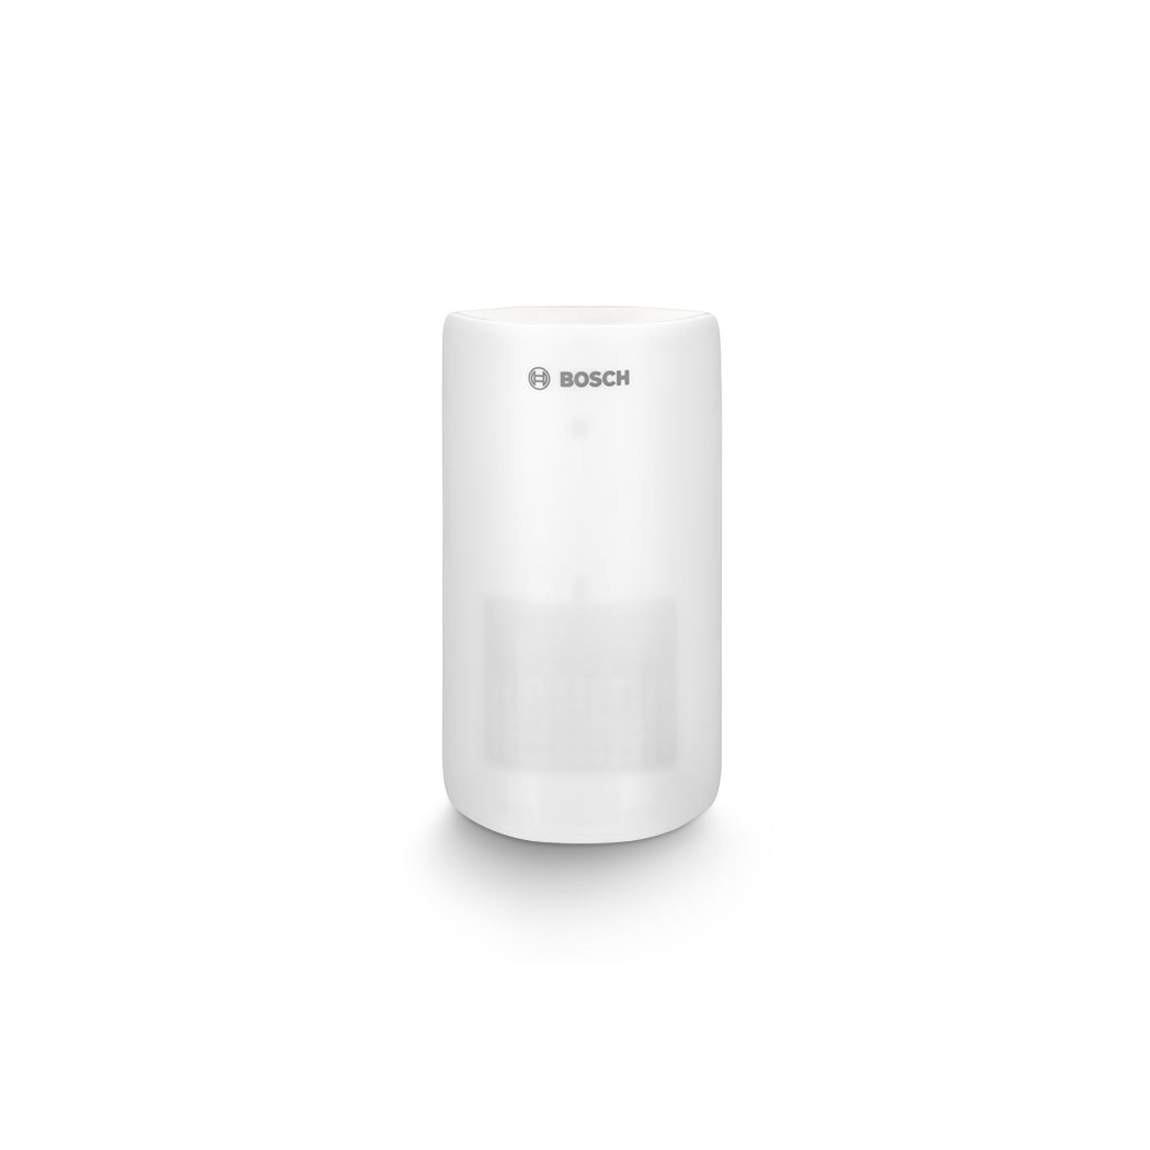 Bosch Smart Home - Starter Set Sicherheit_Bewegungsmelder